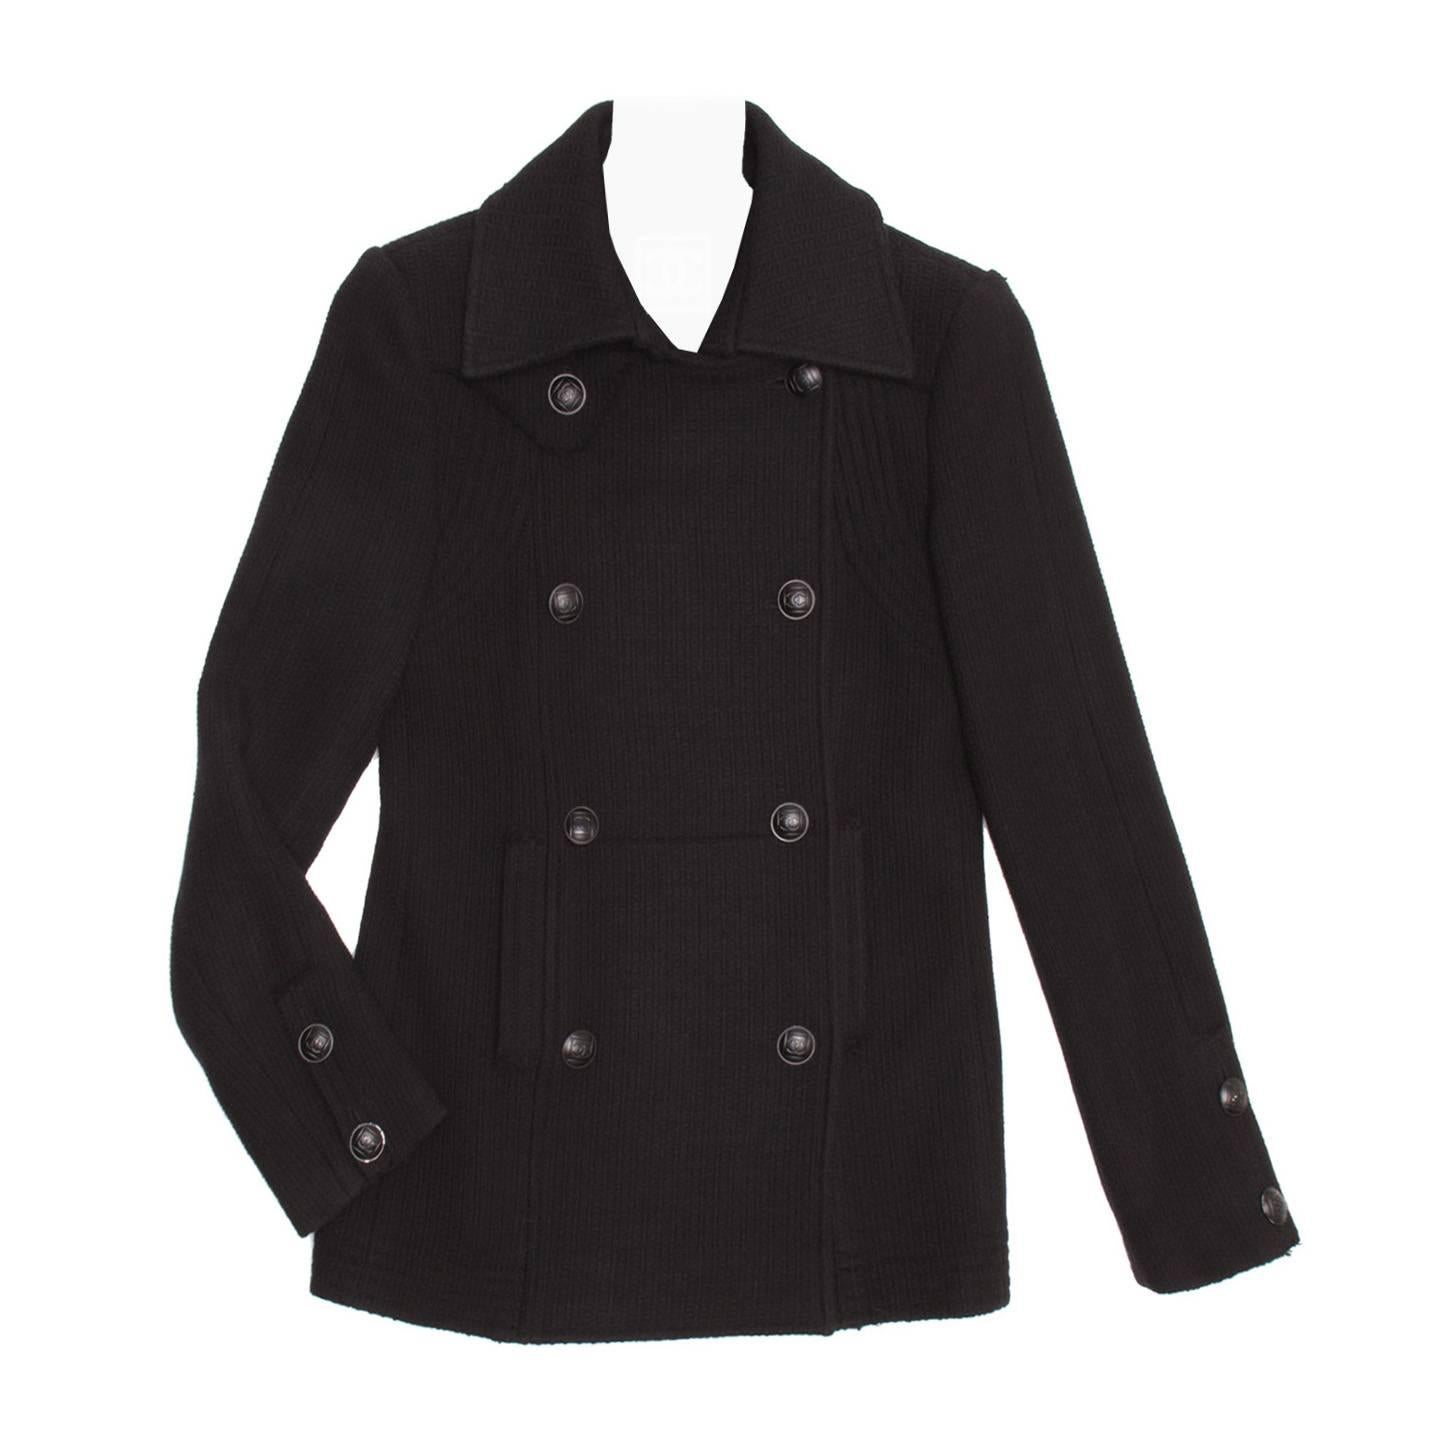 Chanel Black Wool Peacoat Jacket